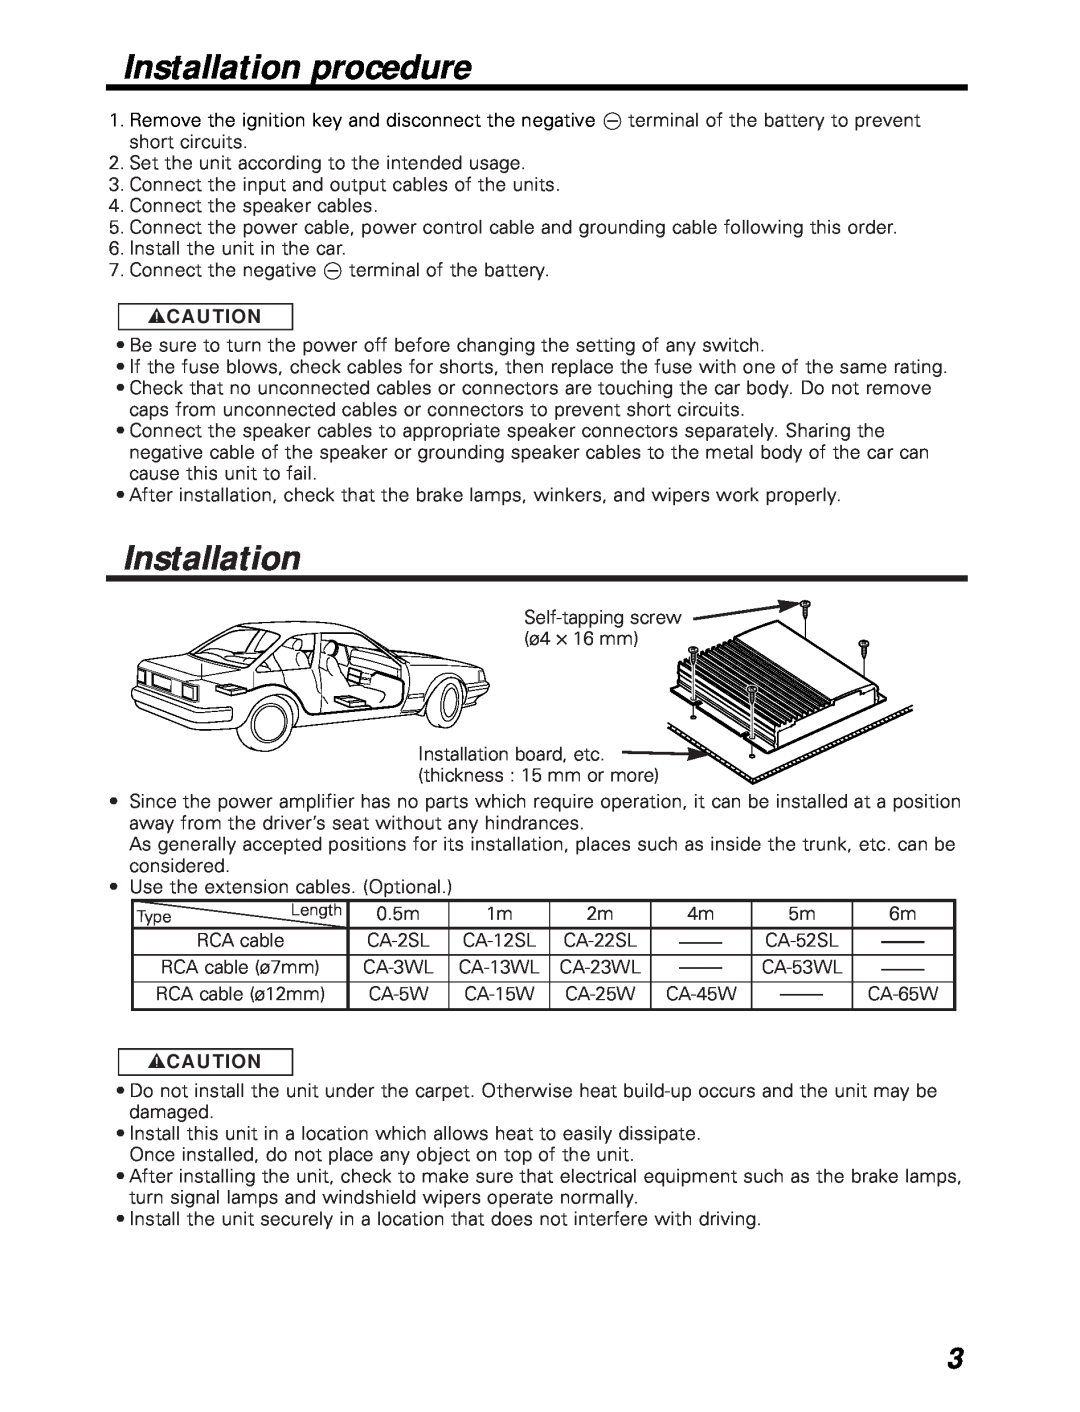 Kenwood KAC-746 instruction manual Installation procedure, 2CAUTION 